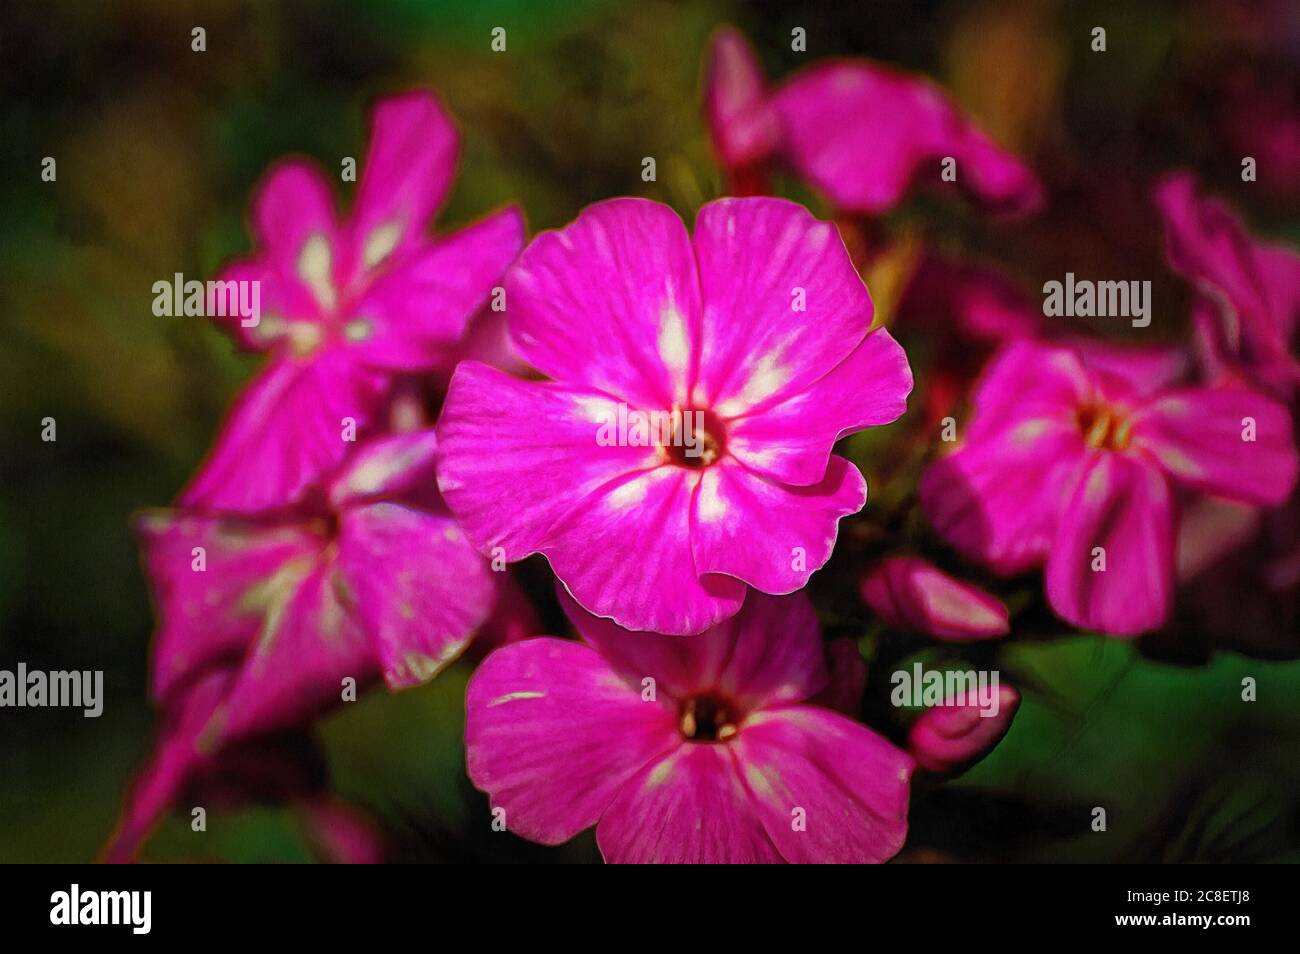 Illustrations flowers Phlox Stock Photo